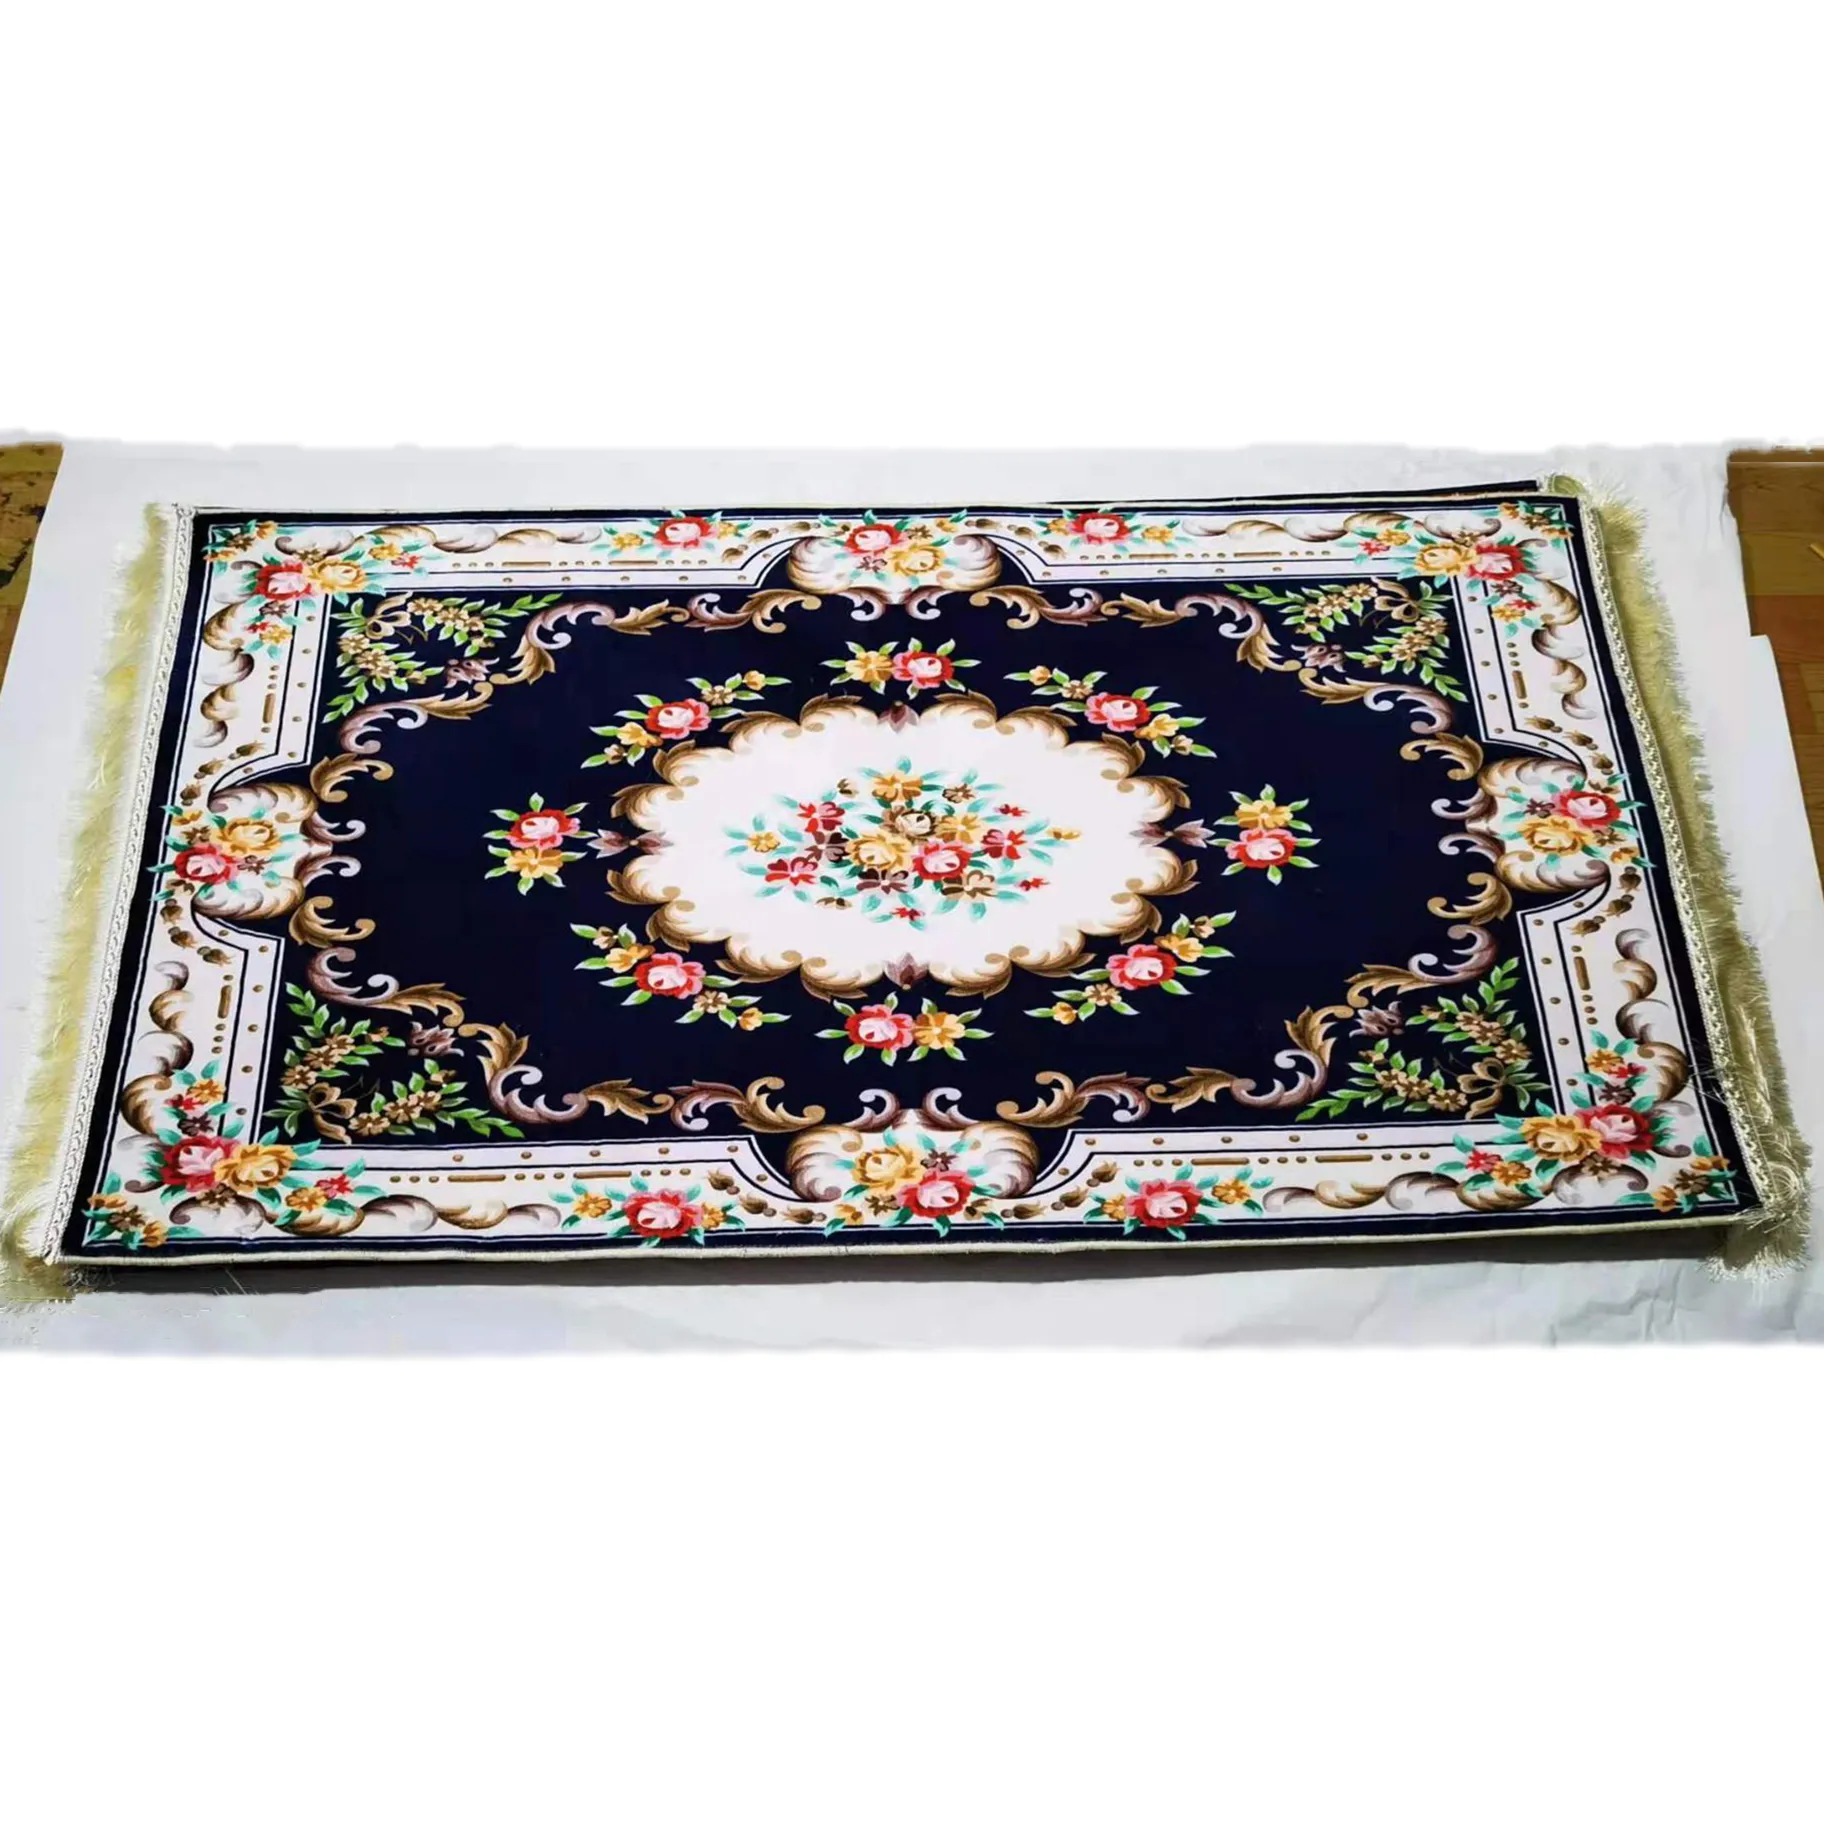 Crystal prayer rug Muslim foldable washable printed floor mat Islamic pilgrimage carpet